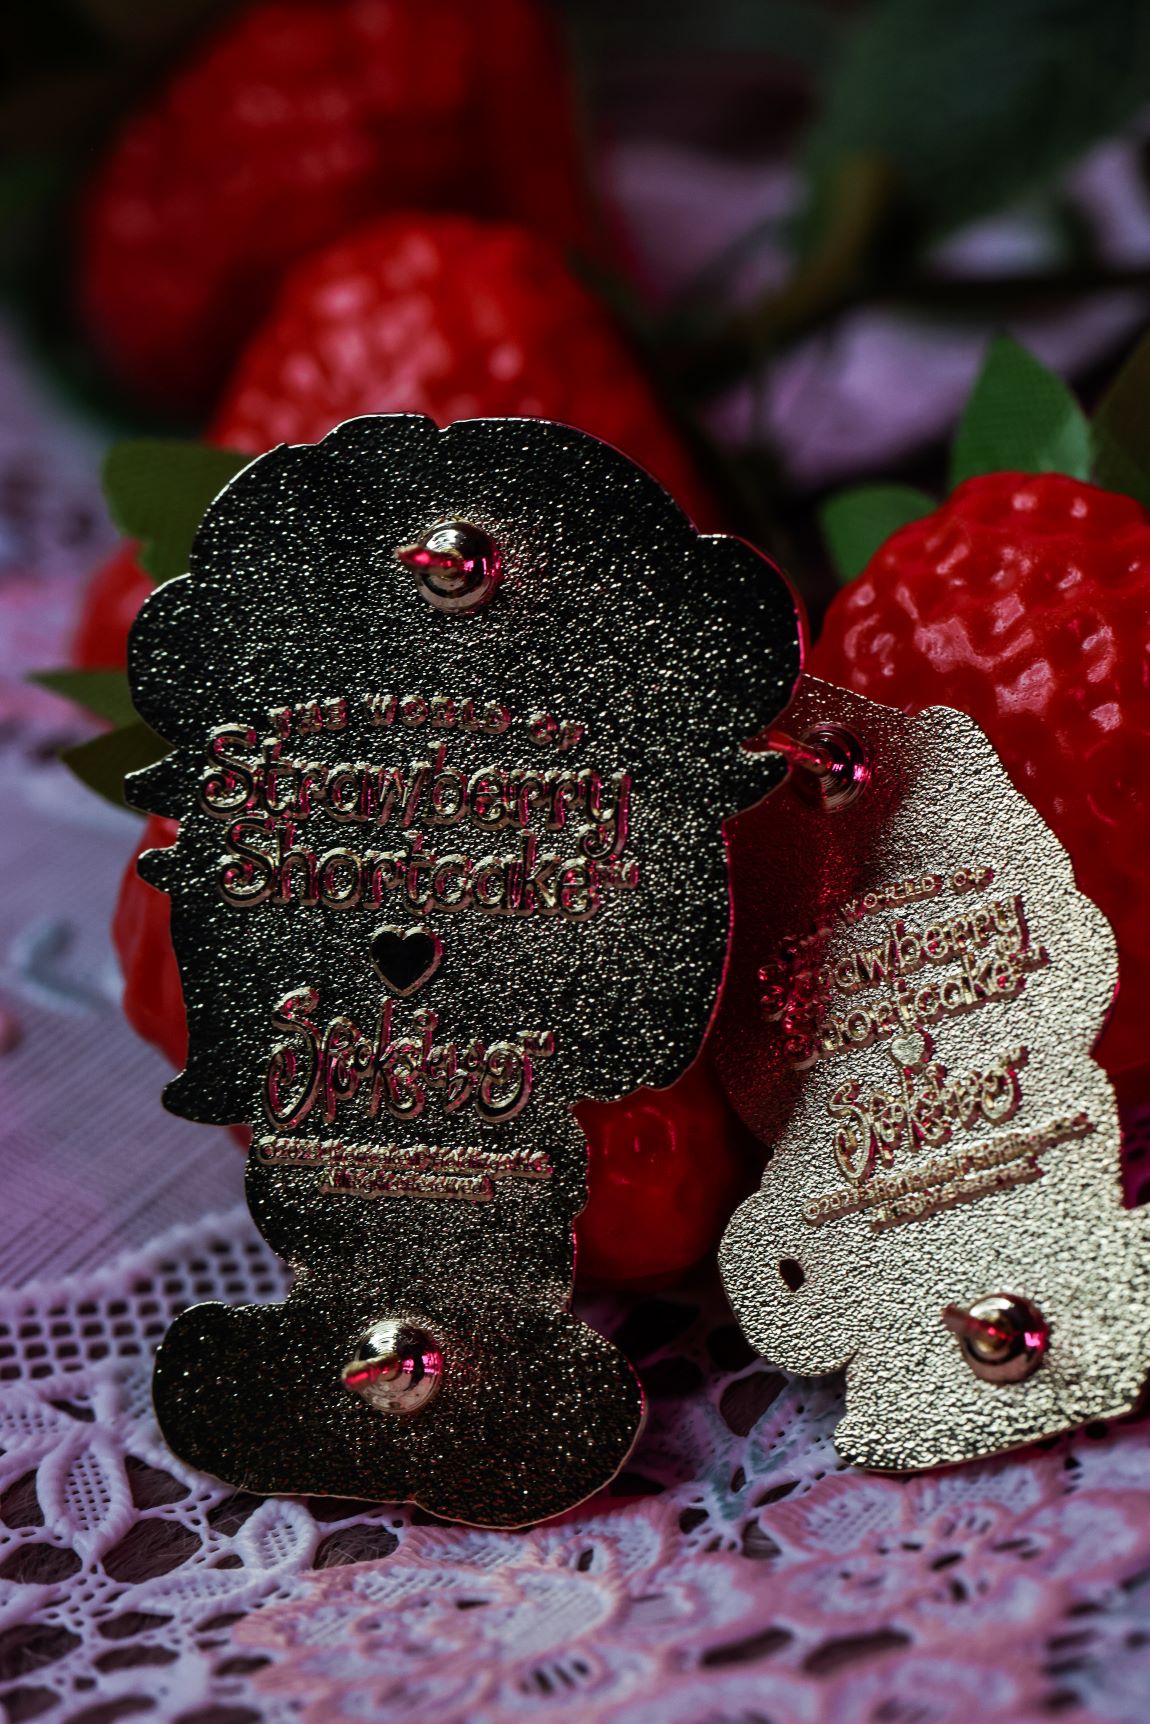 Tea Party Enamel Pin Set - Strawberry Shortcake™ ♥ SpooksieBoo™